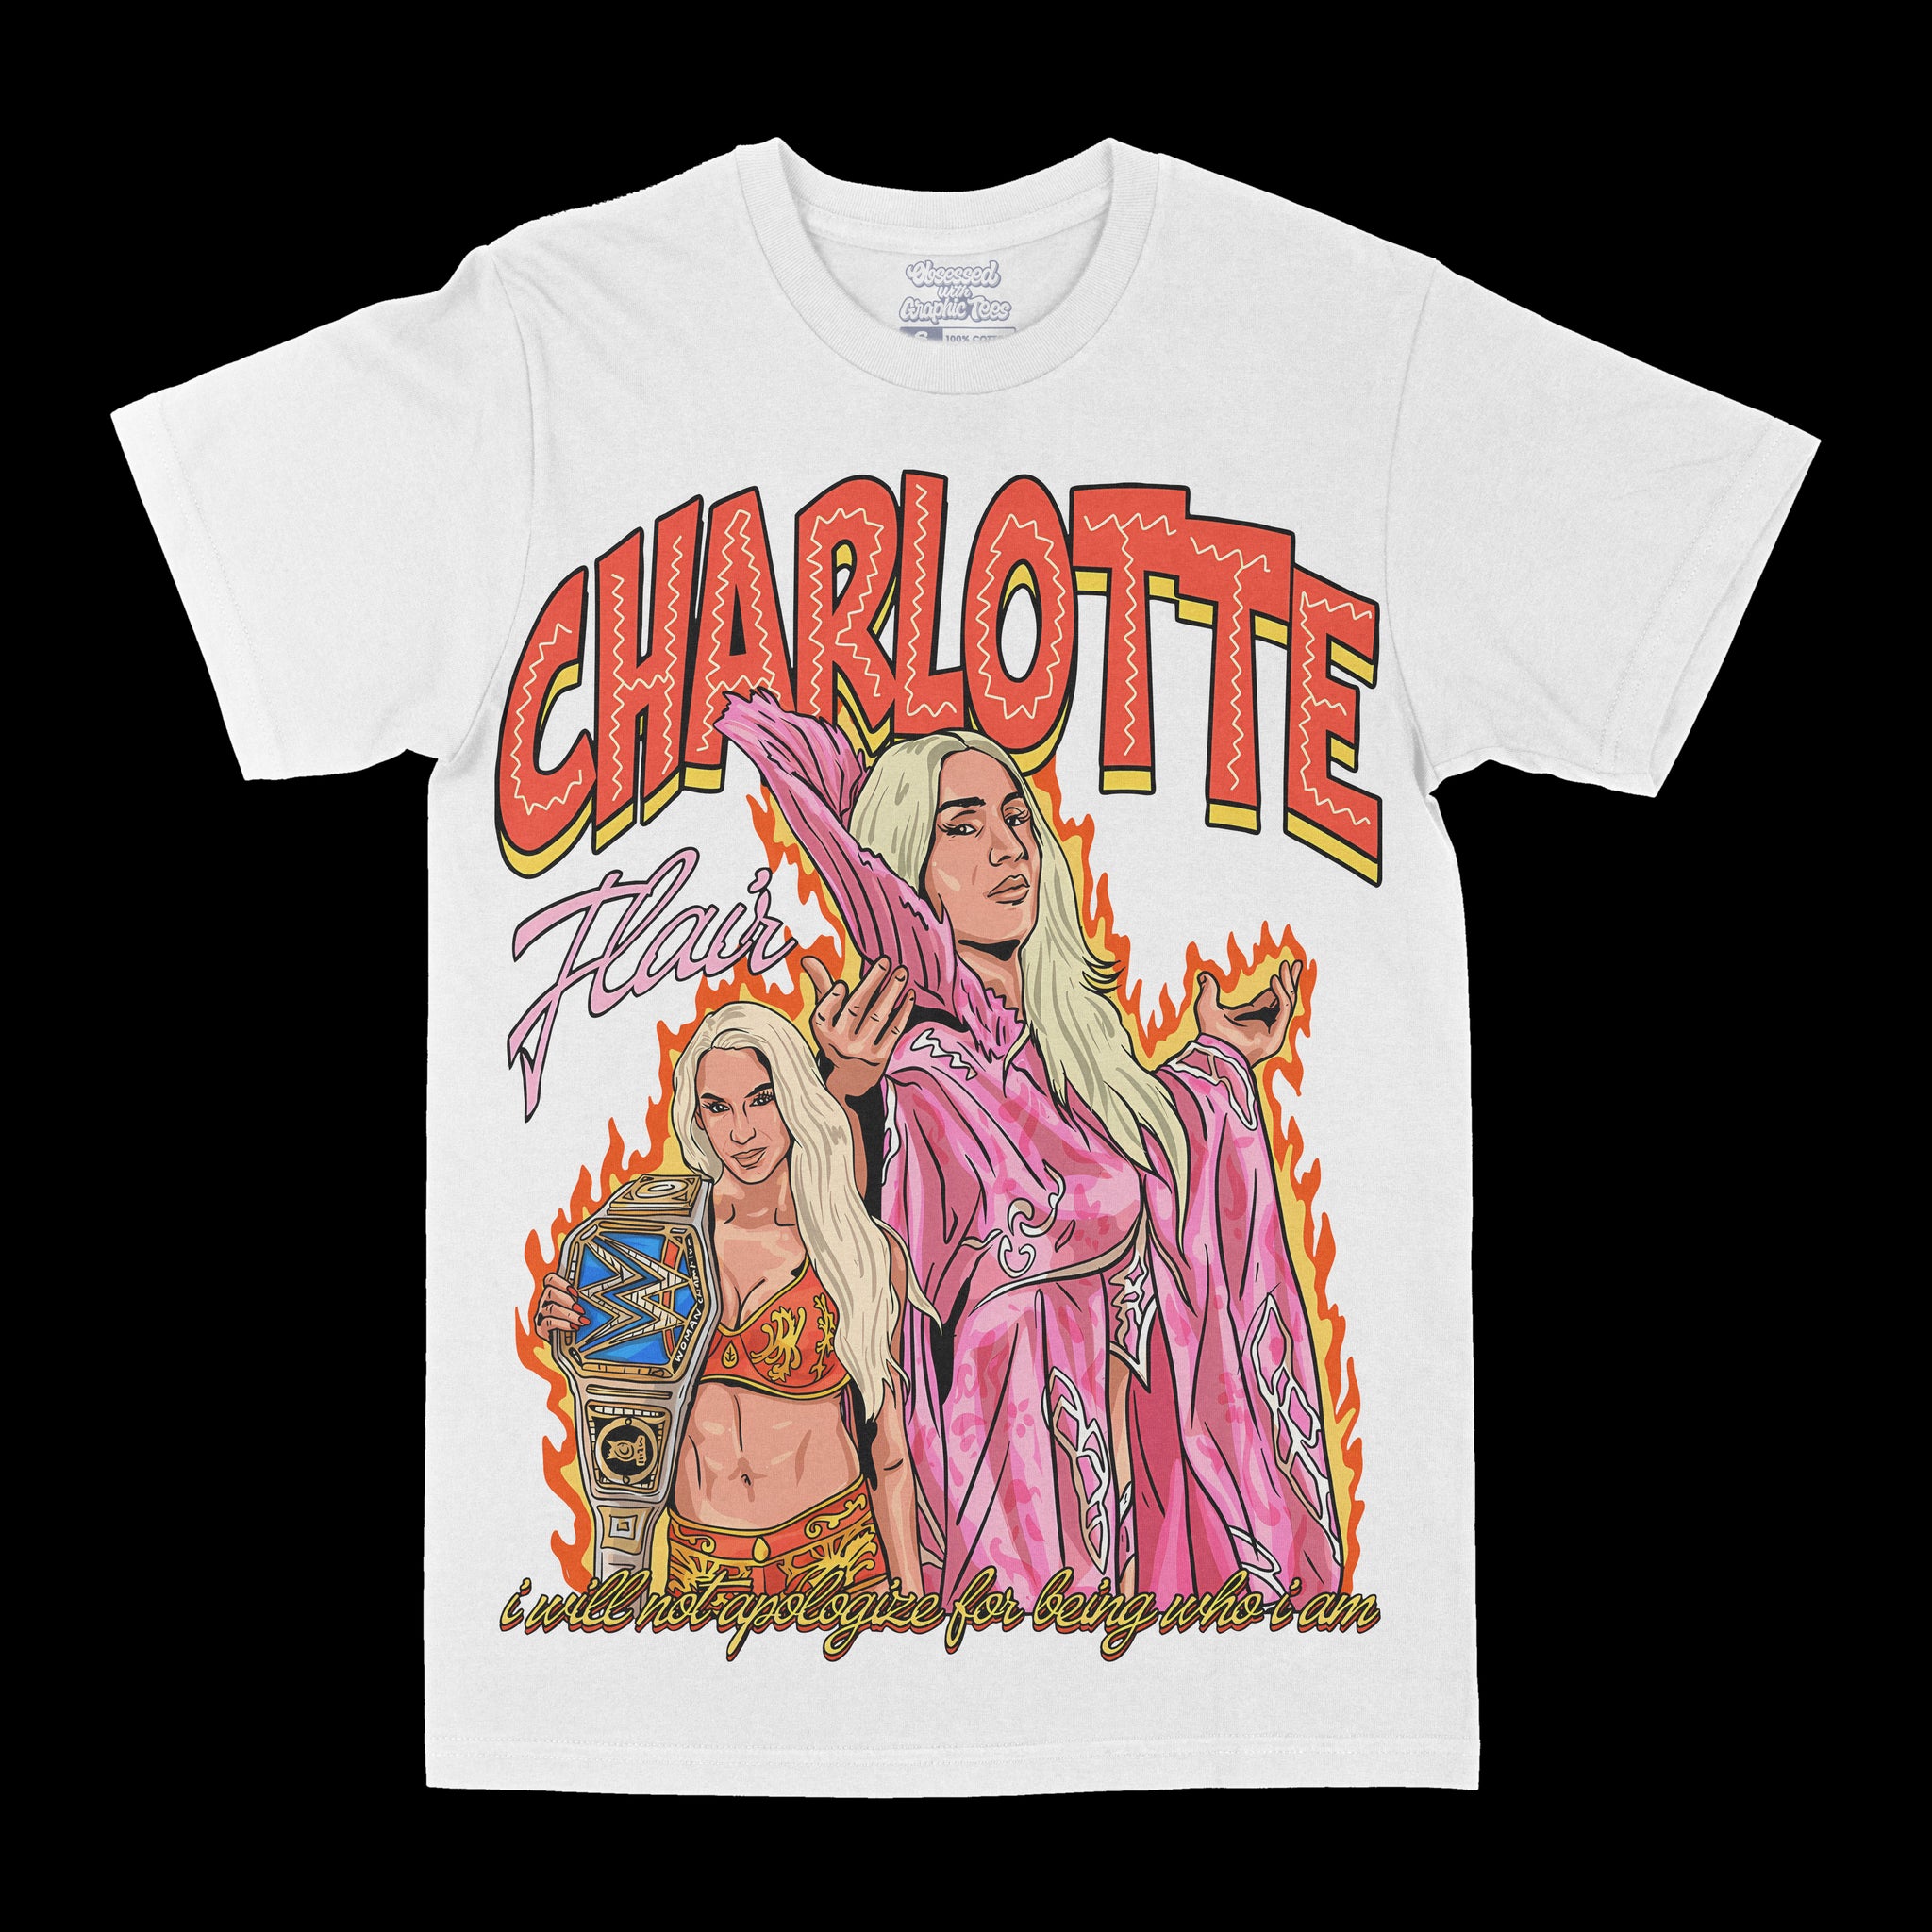 Charlotte Flair "Who Am I" Graphic Tee